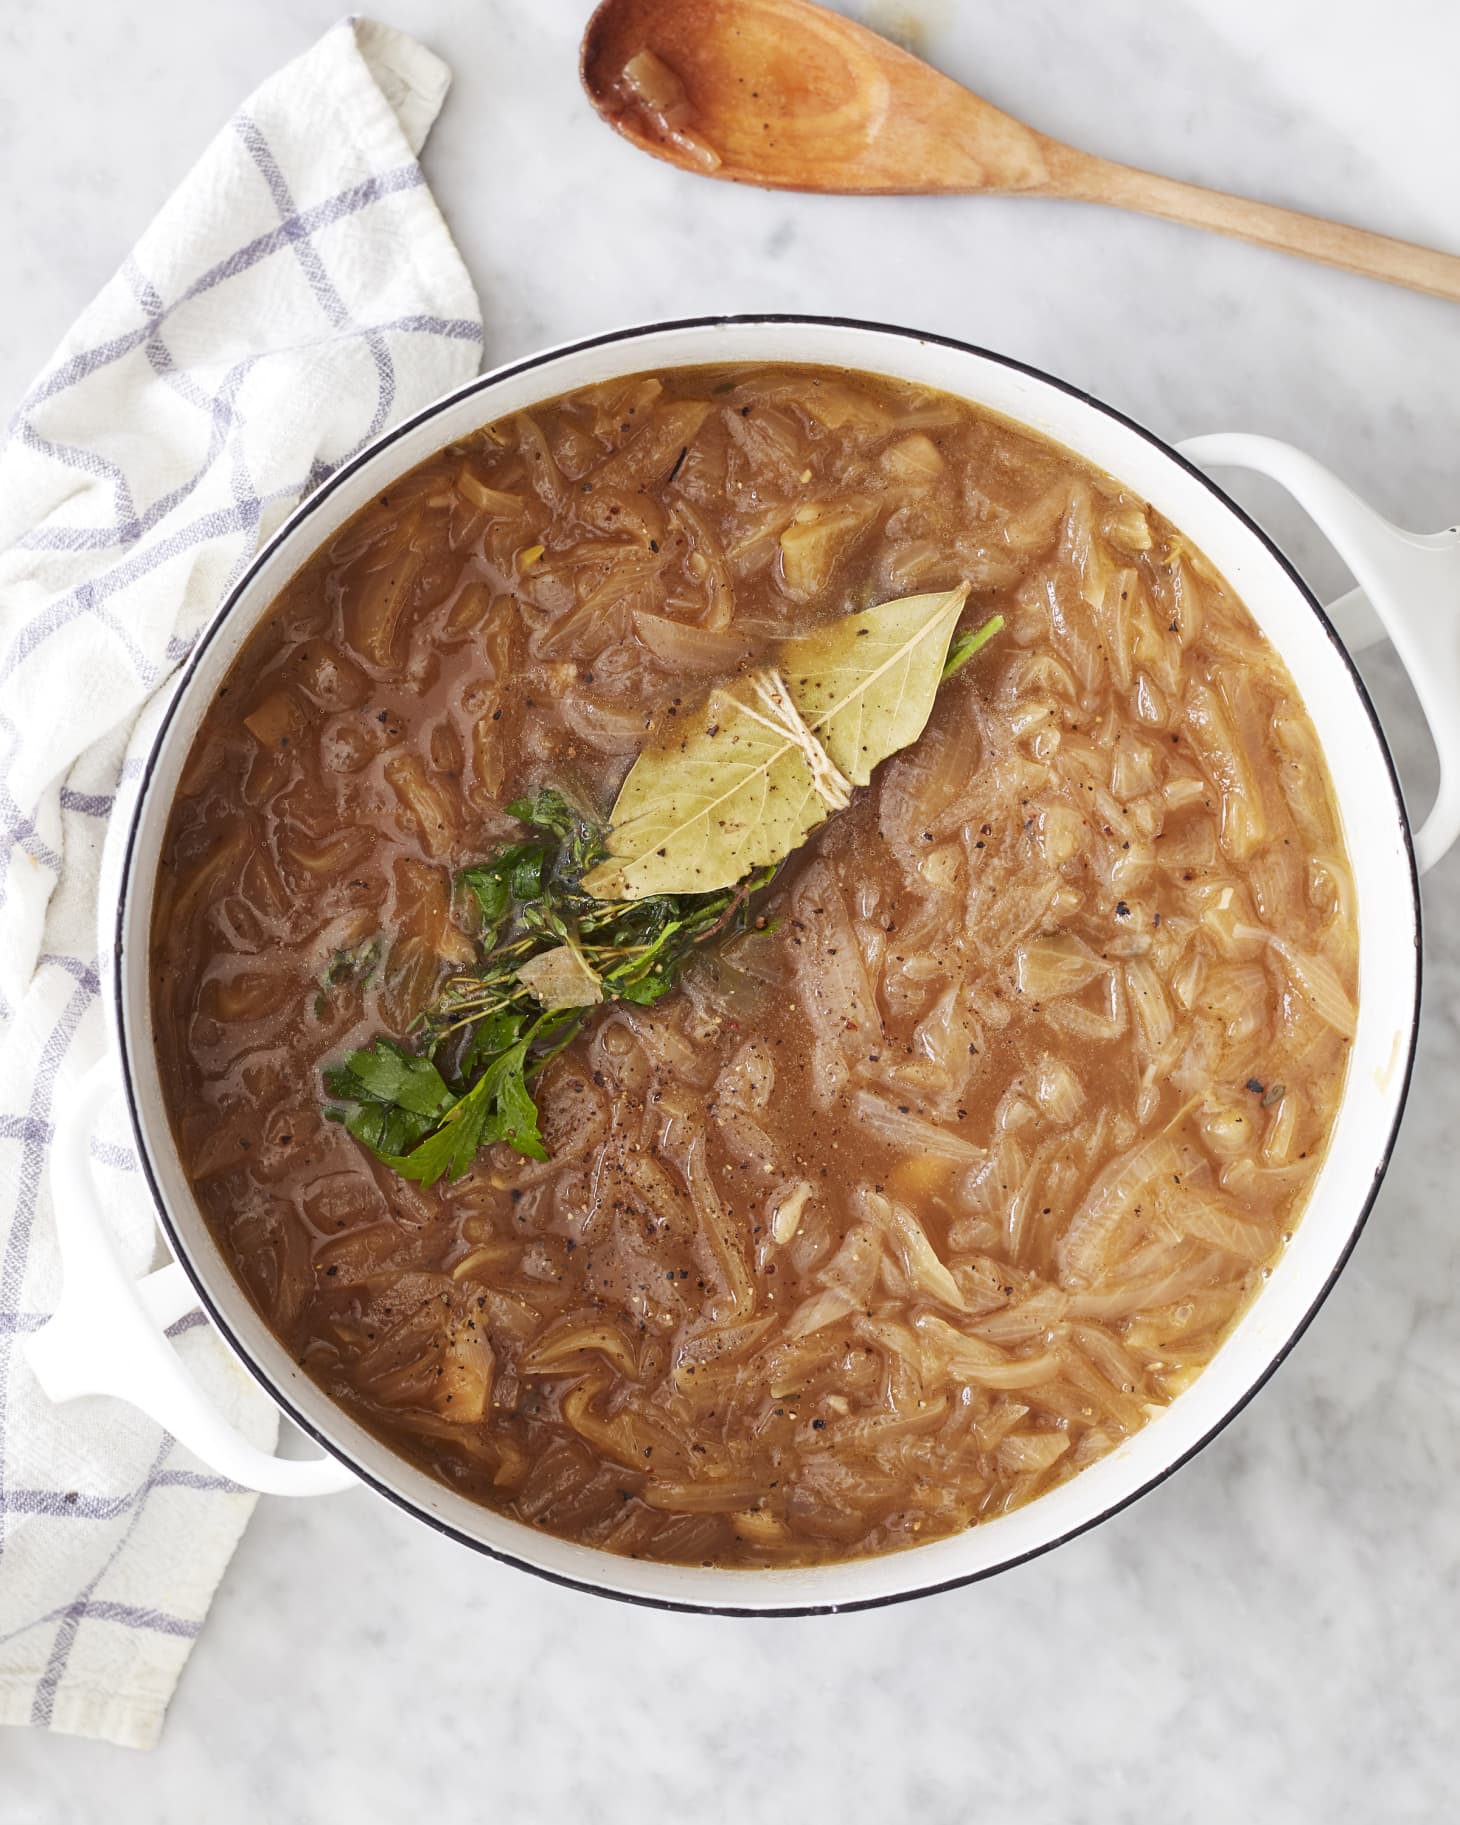 I Tried Alton Brown's French Onion Soup Recipe | Kitchn